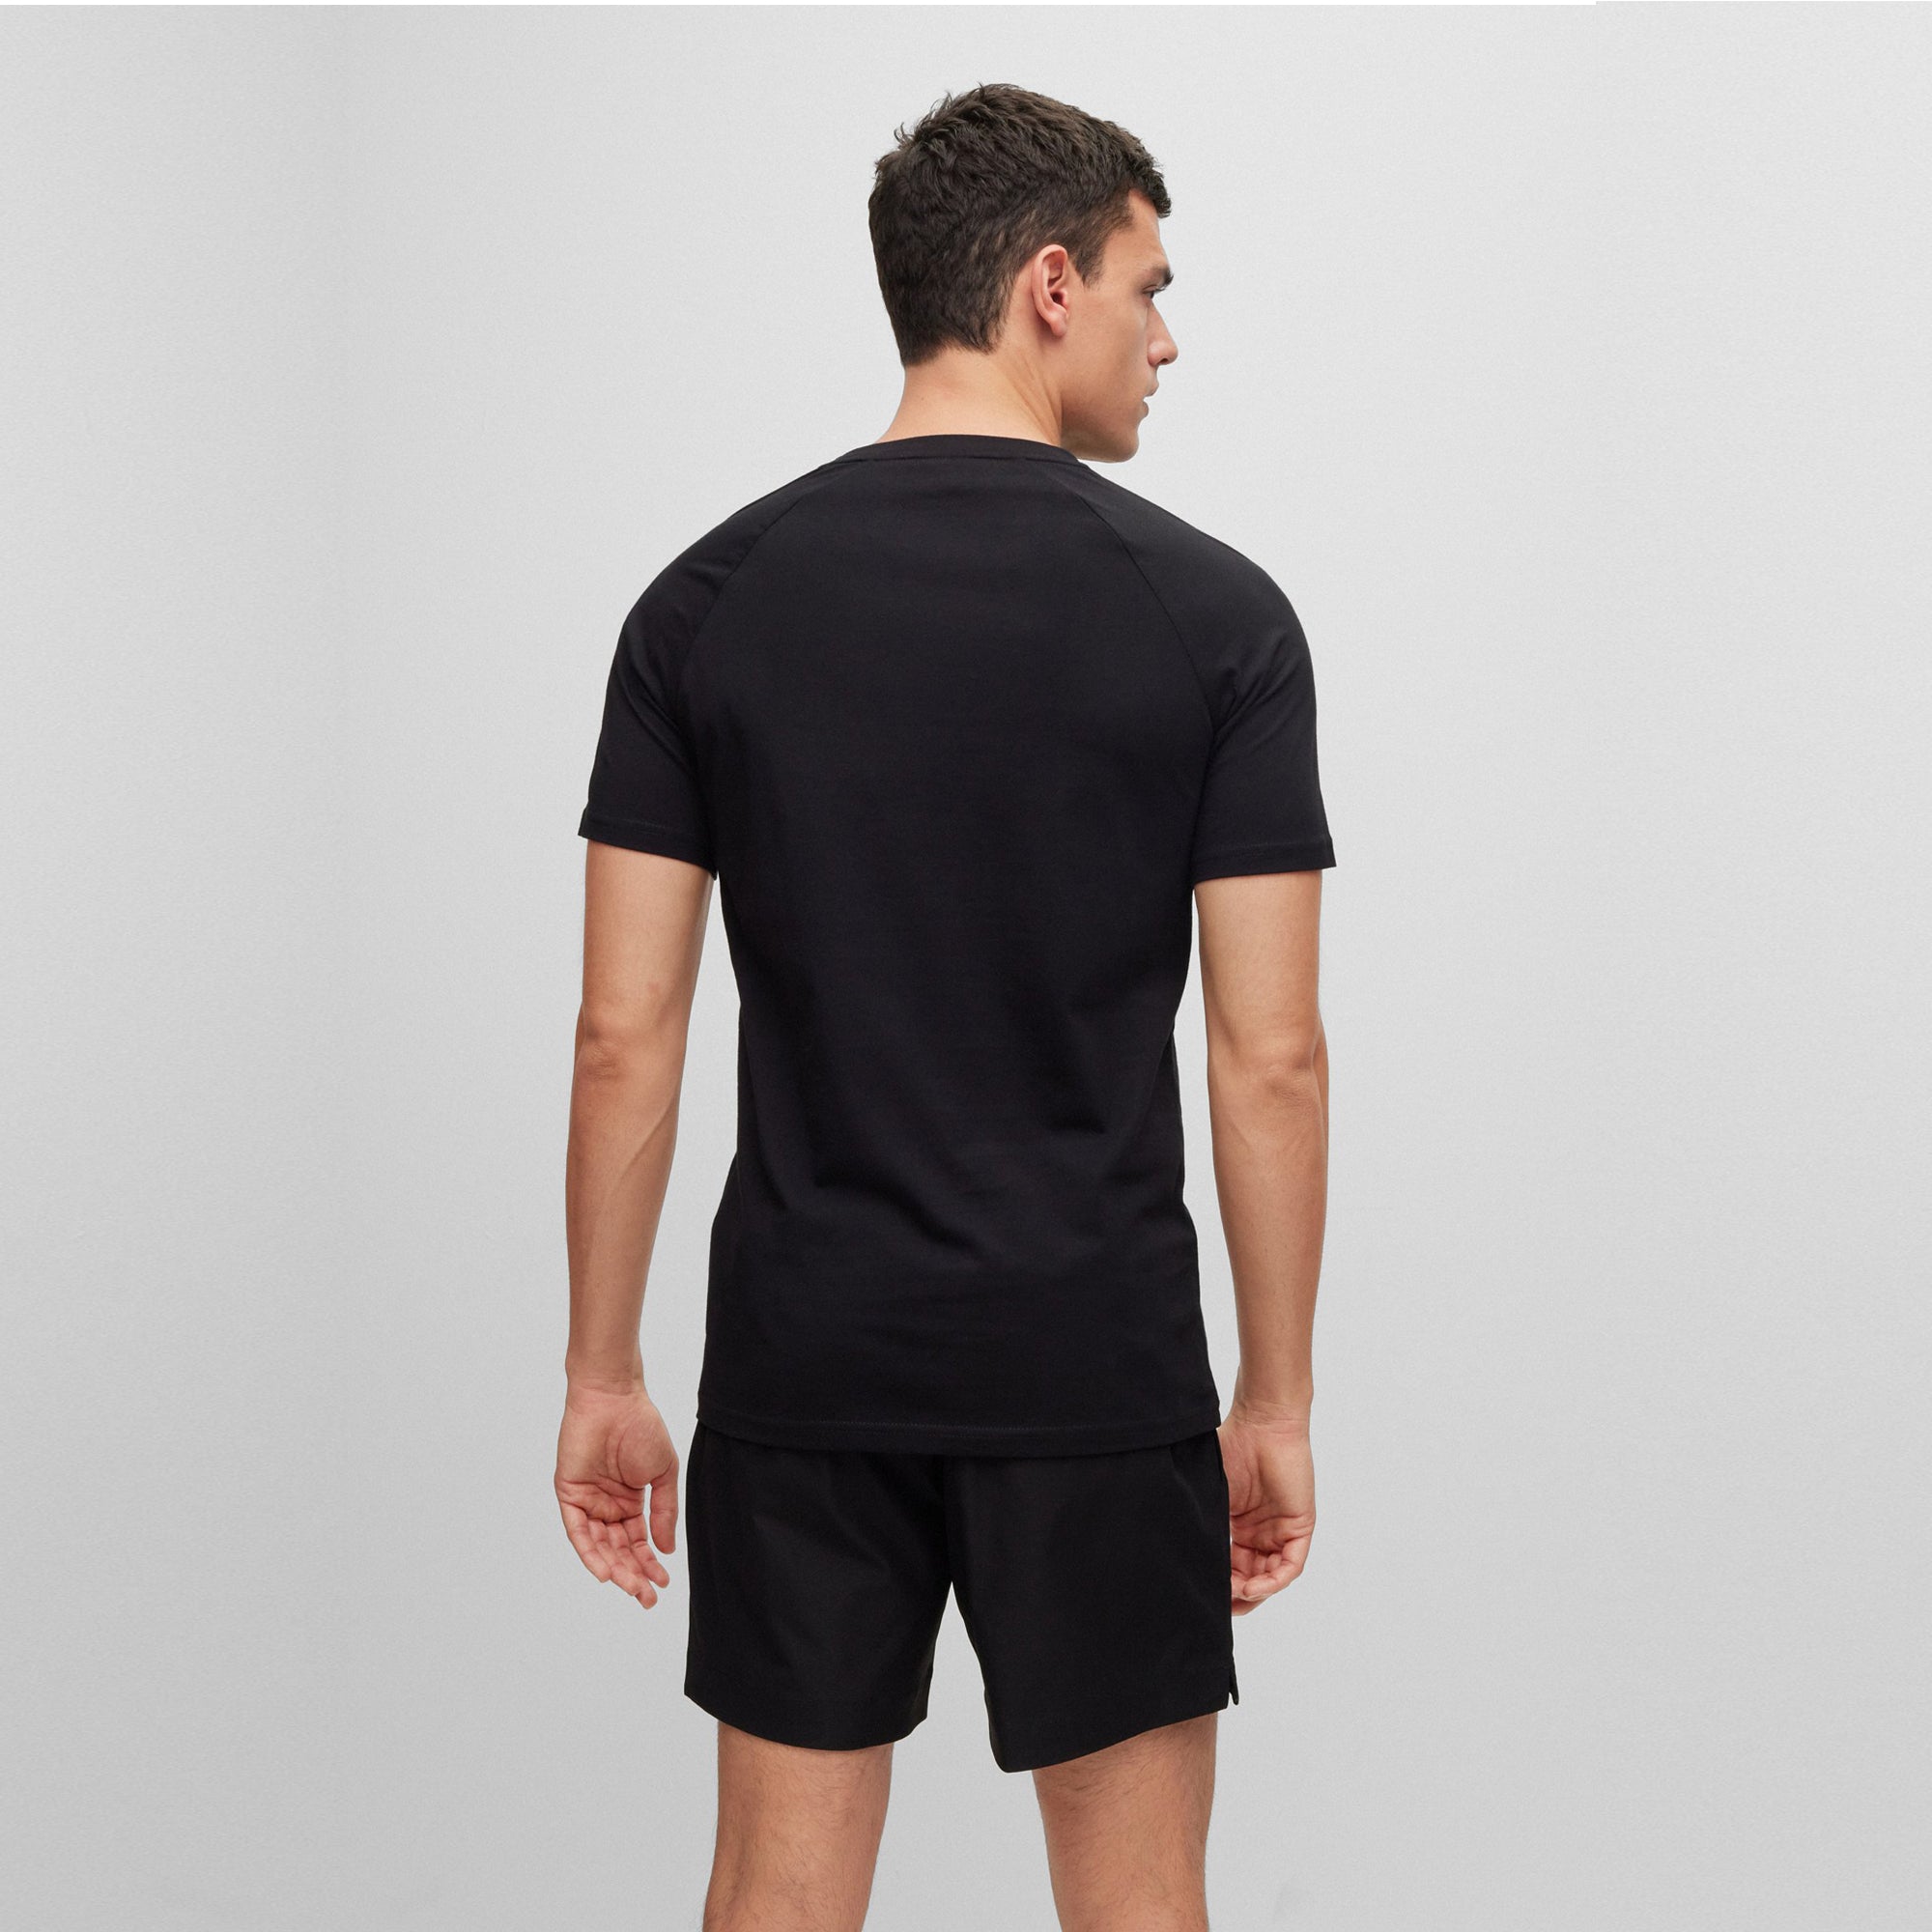 Hugo Boss Mens Slim Fit T-shirt With SPF 50+ Uv Protection Black Large